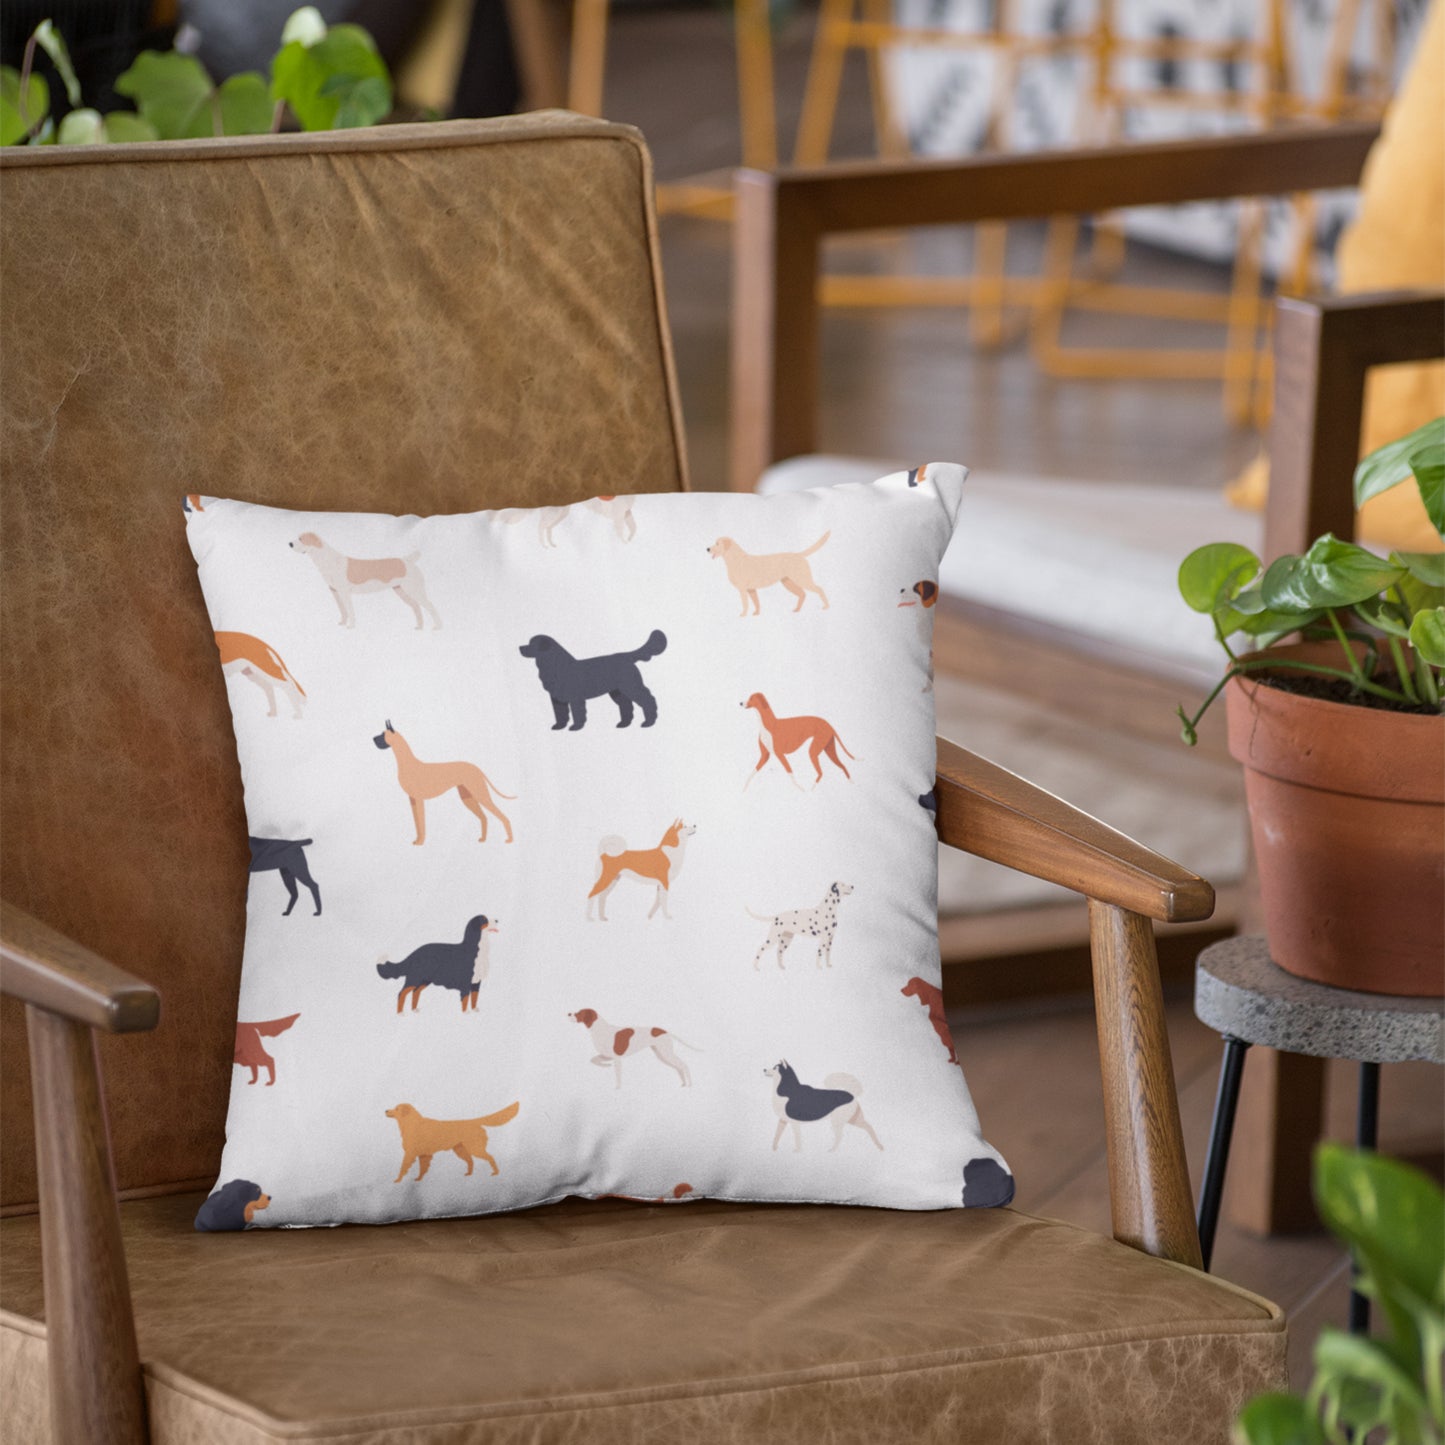 Adorable Canine Decorative Cushion